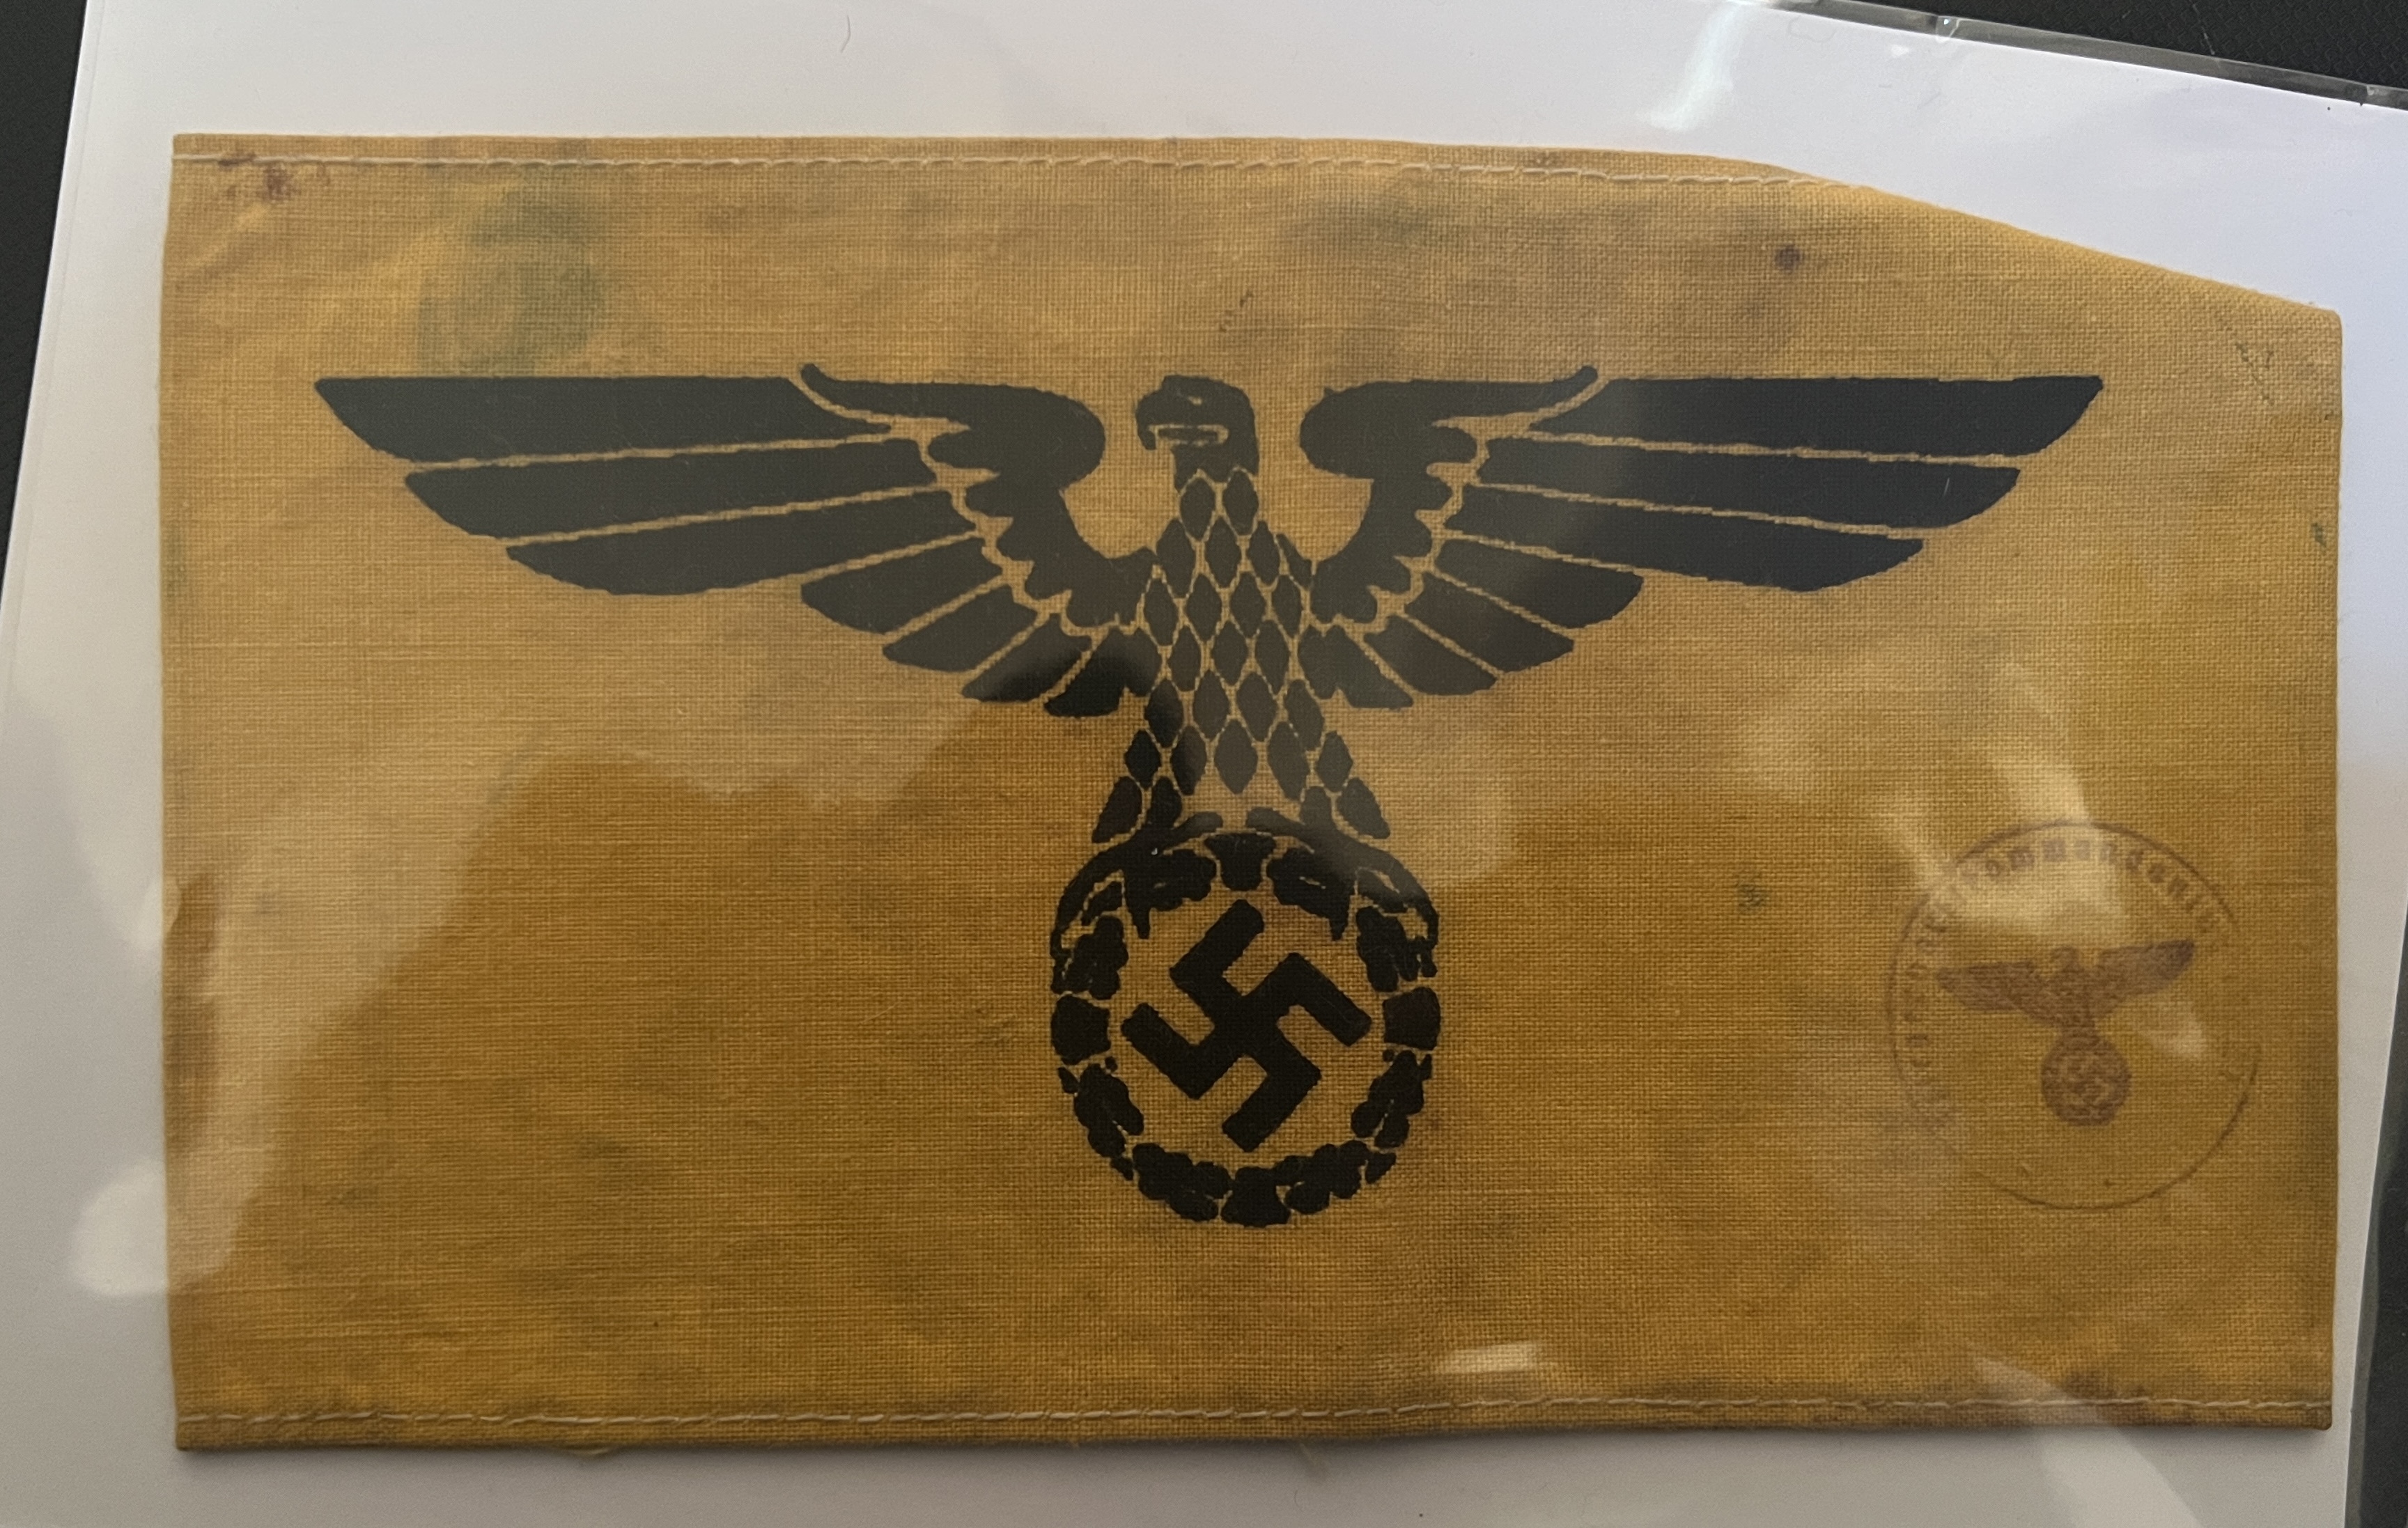 black eagle and swastika upon yellow band, striking simple design